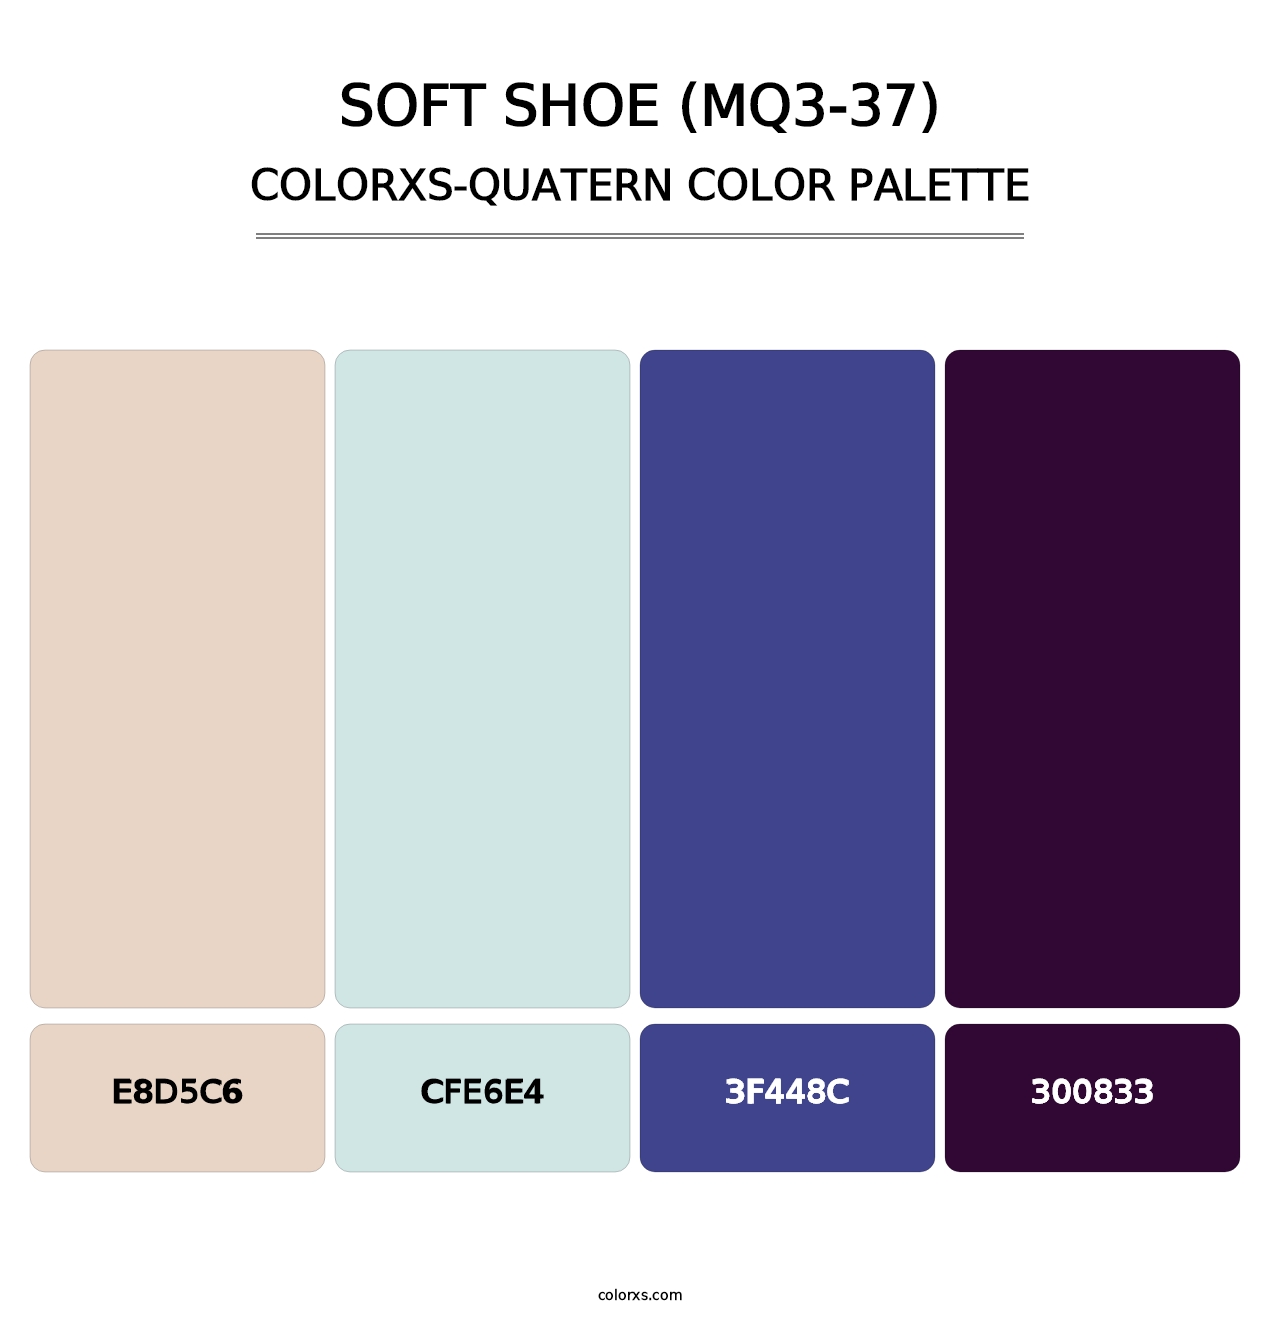 Soft Shoe (MQ3-37) - Colorxs Quatern Palette